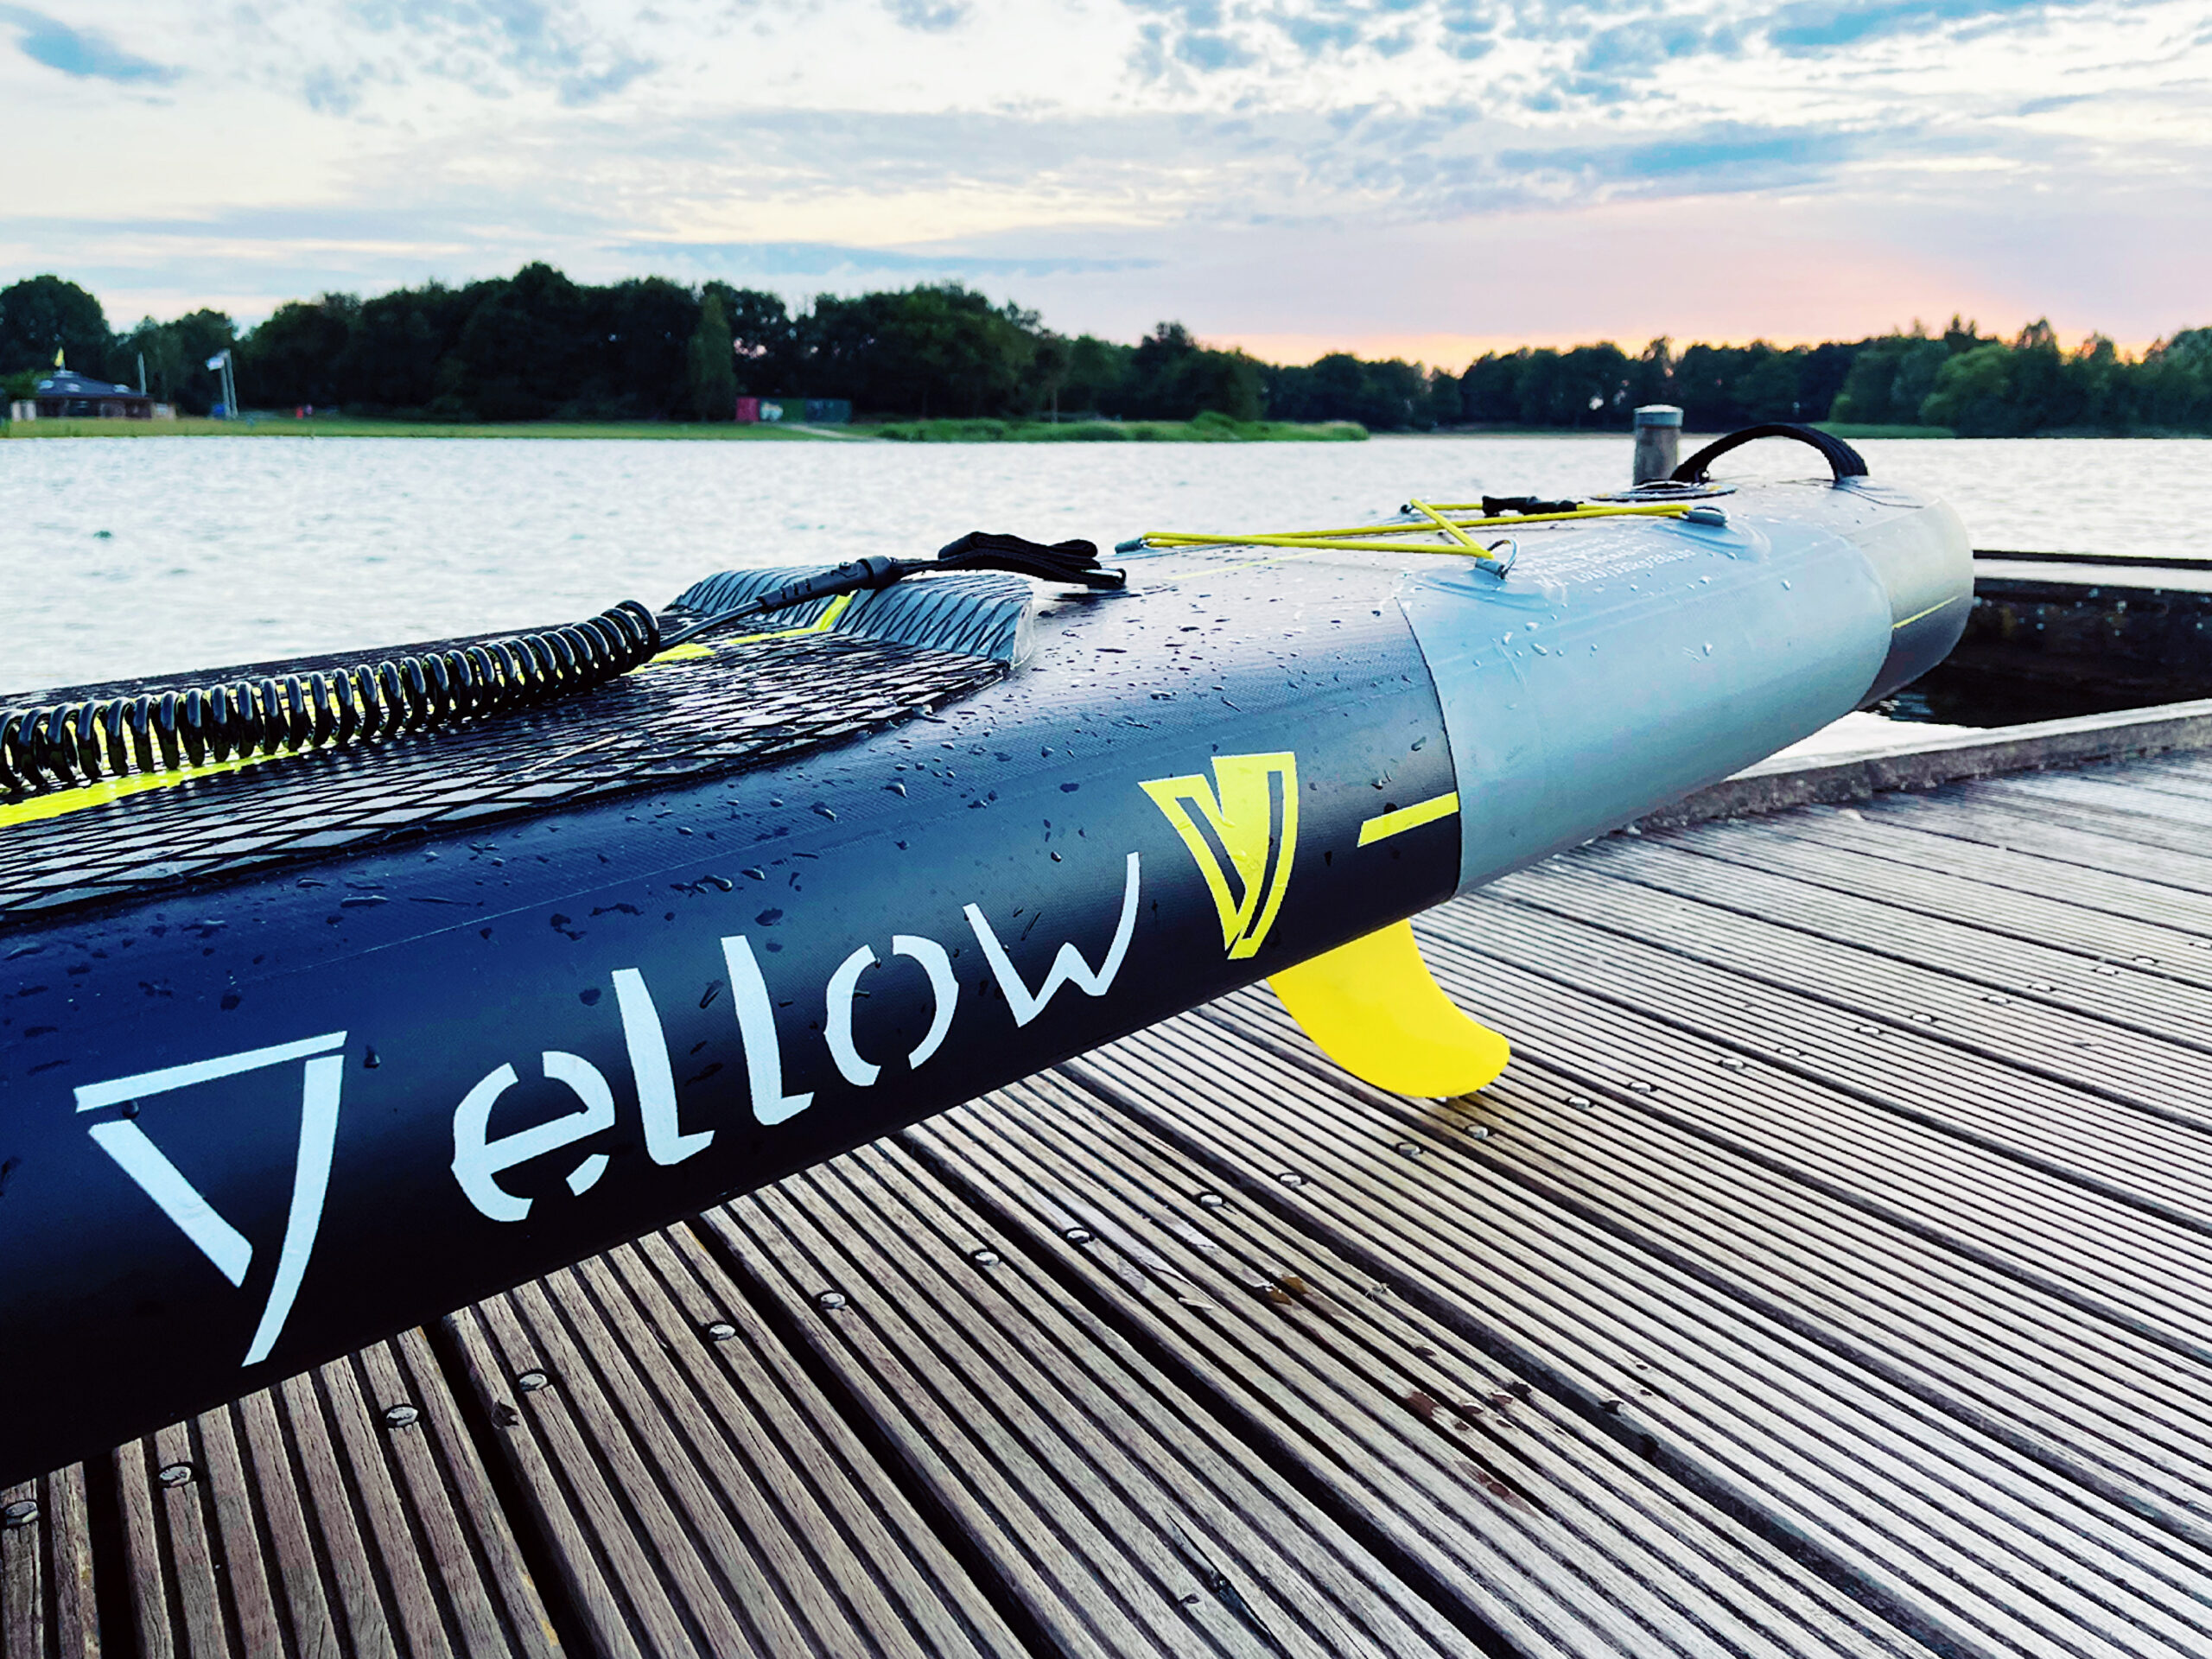 YellowV Tugela suppen supboard paddleboard Vlijmen Den Bosch Vught